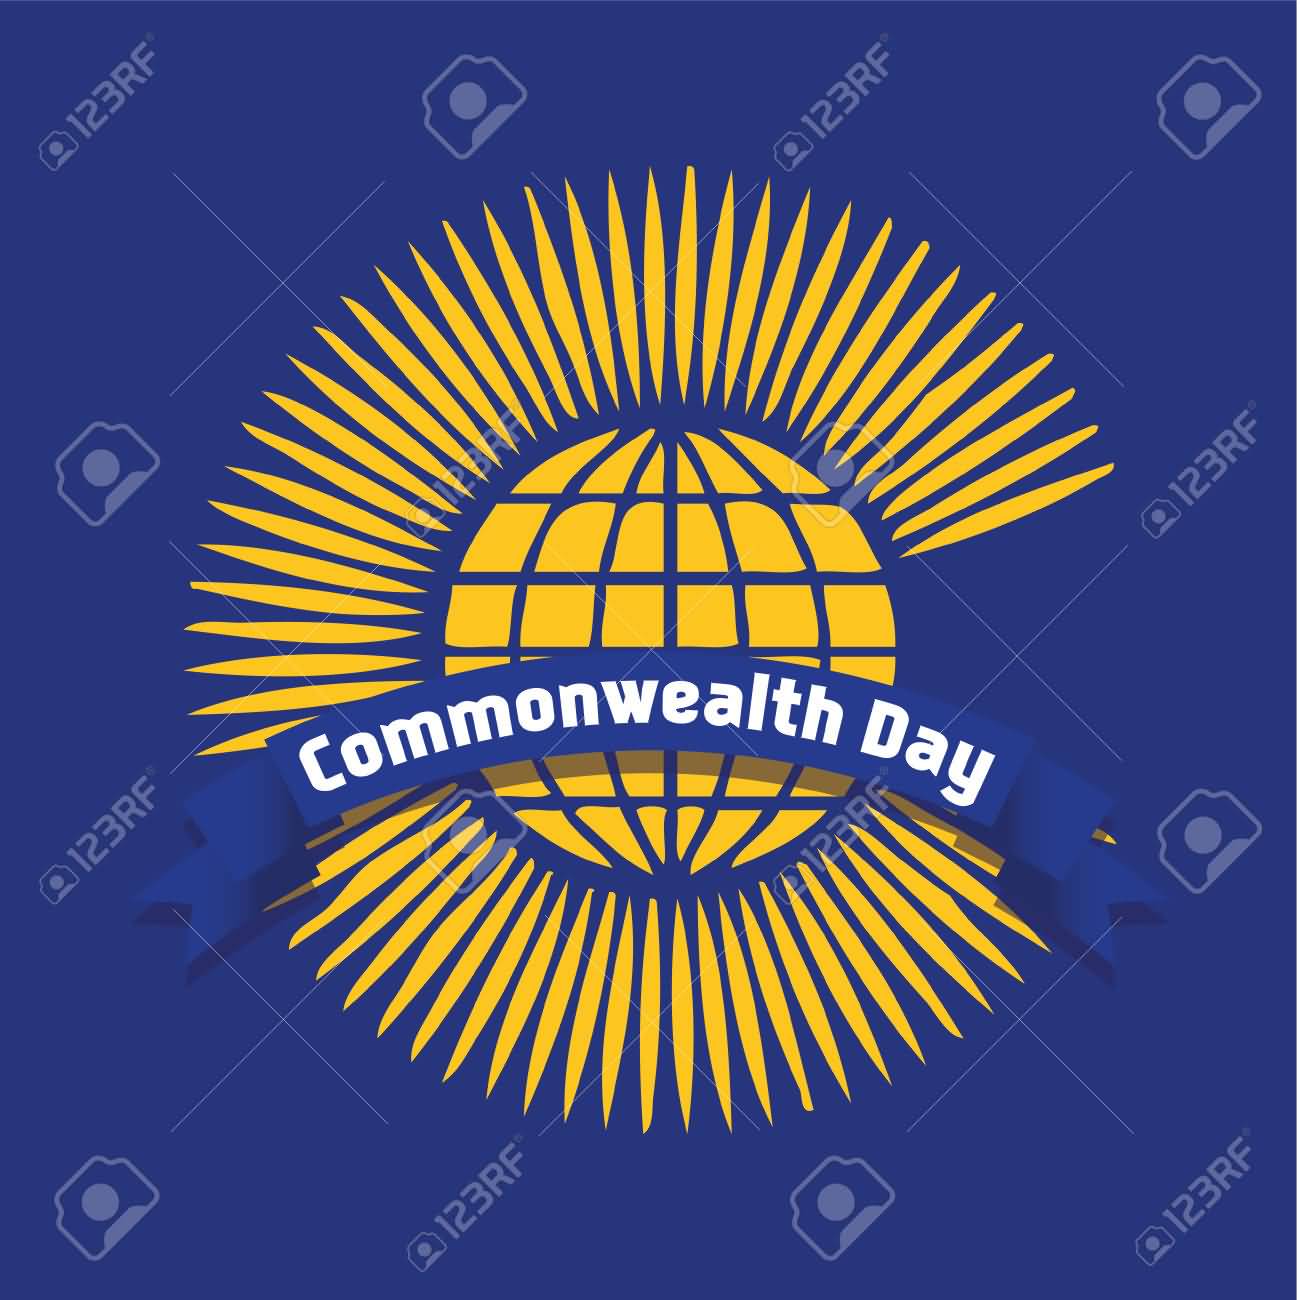 Commonwealth Day Illustration